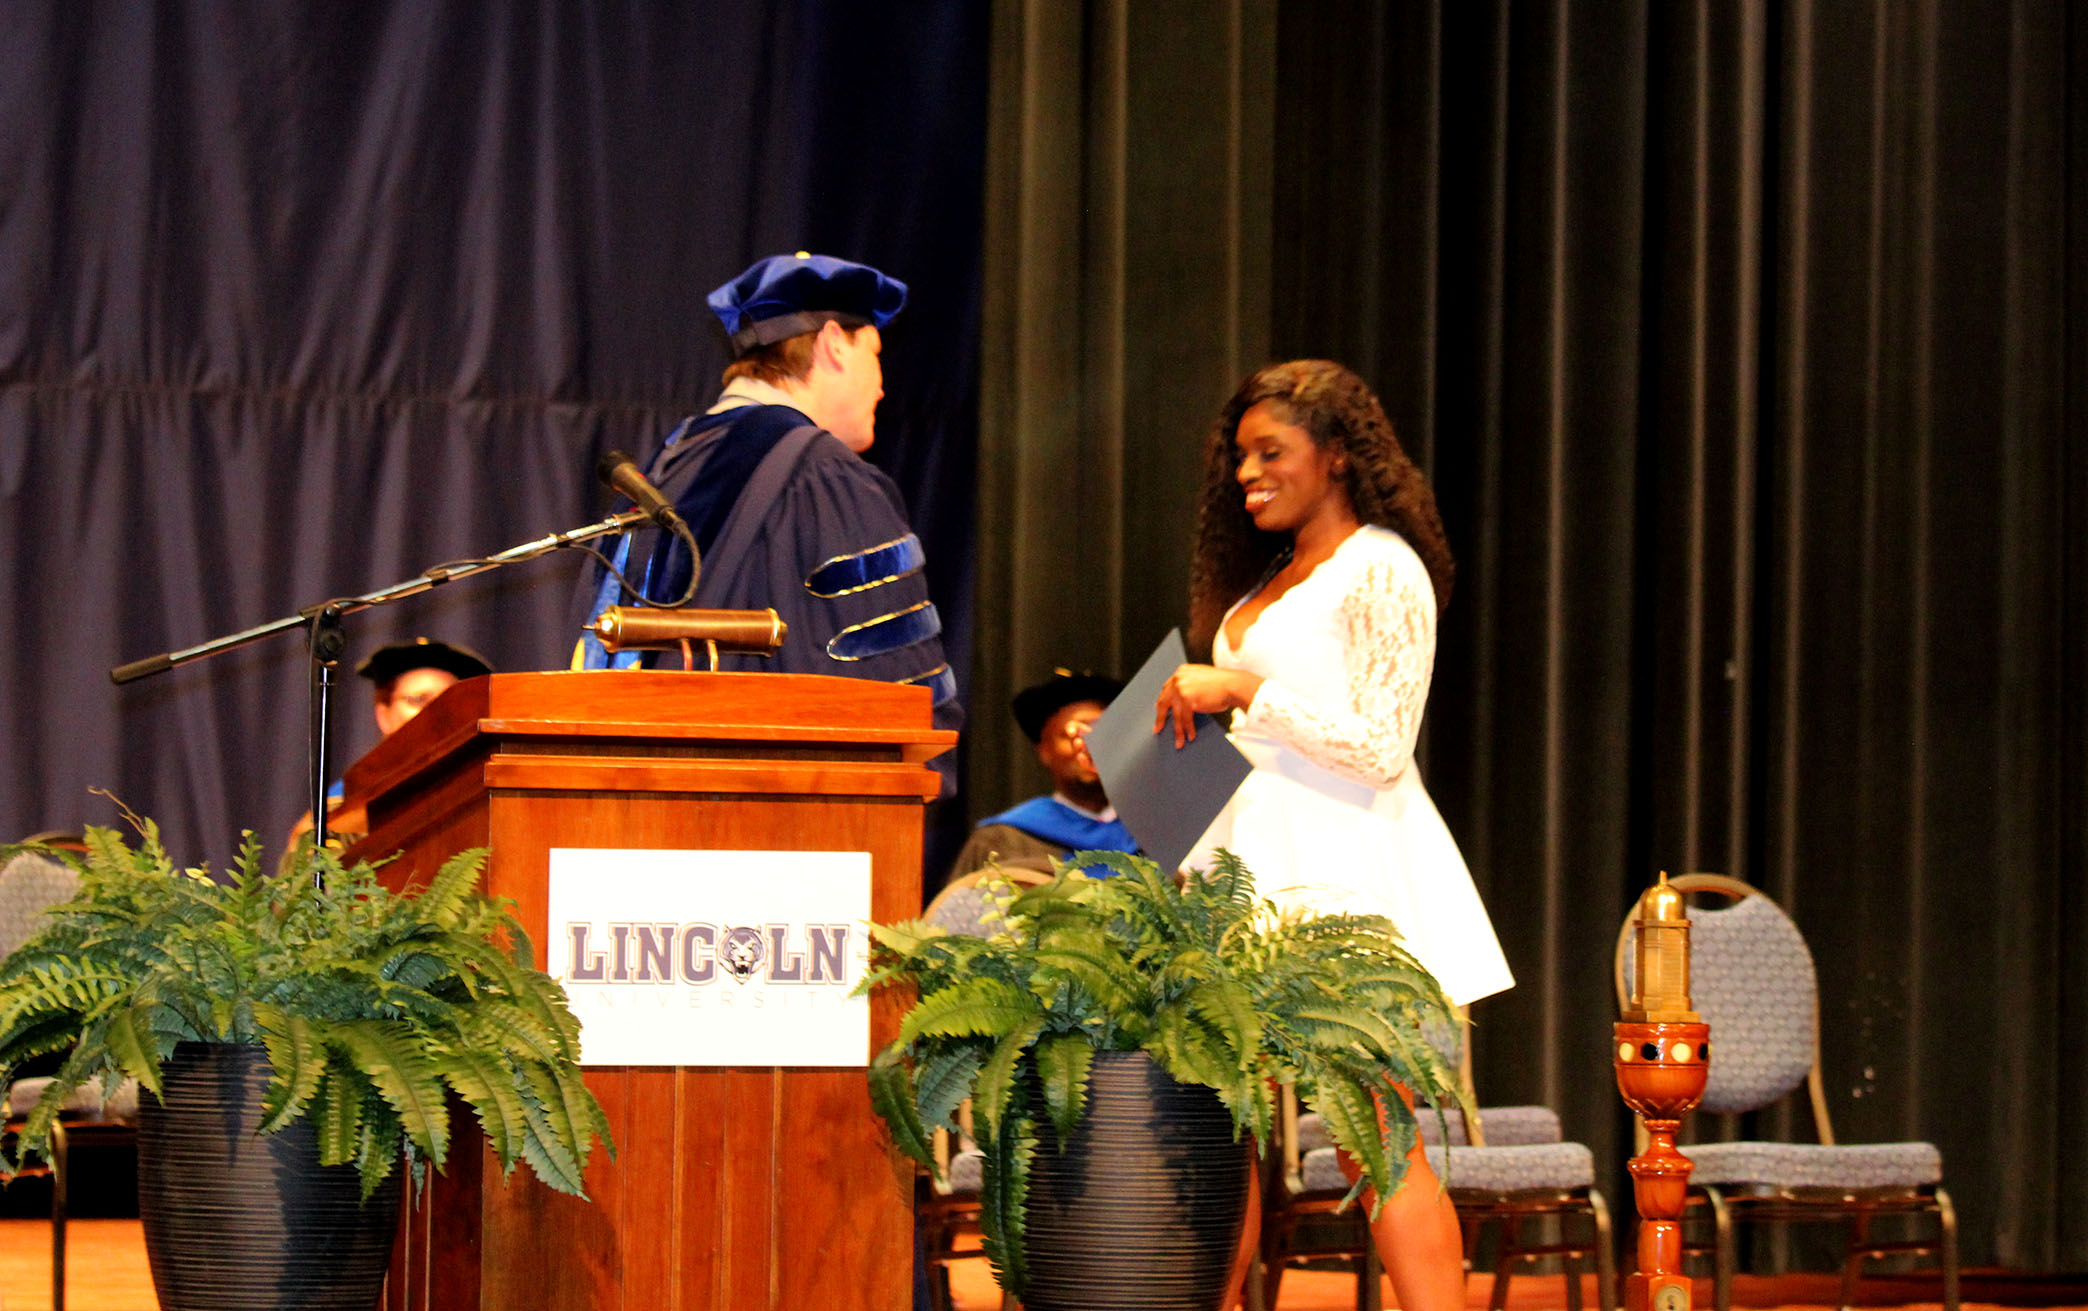 Lincoln University of Missouri Student receives award